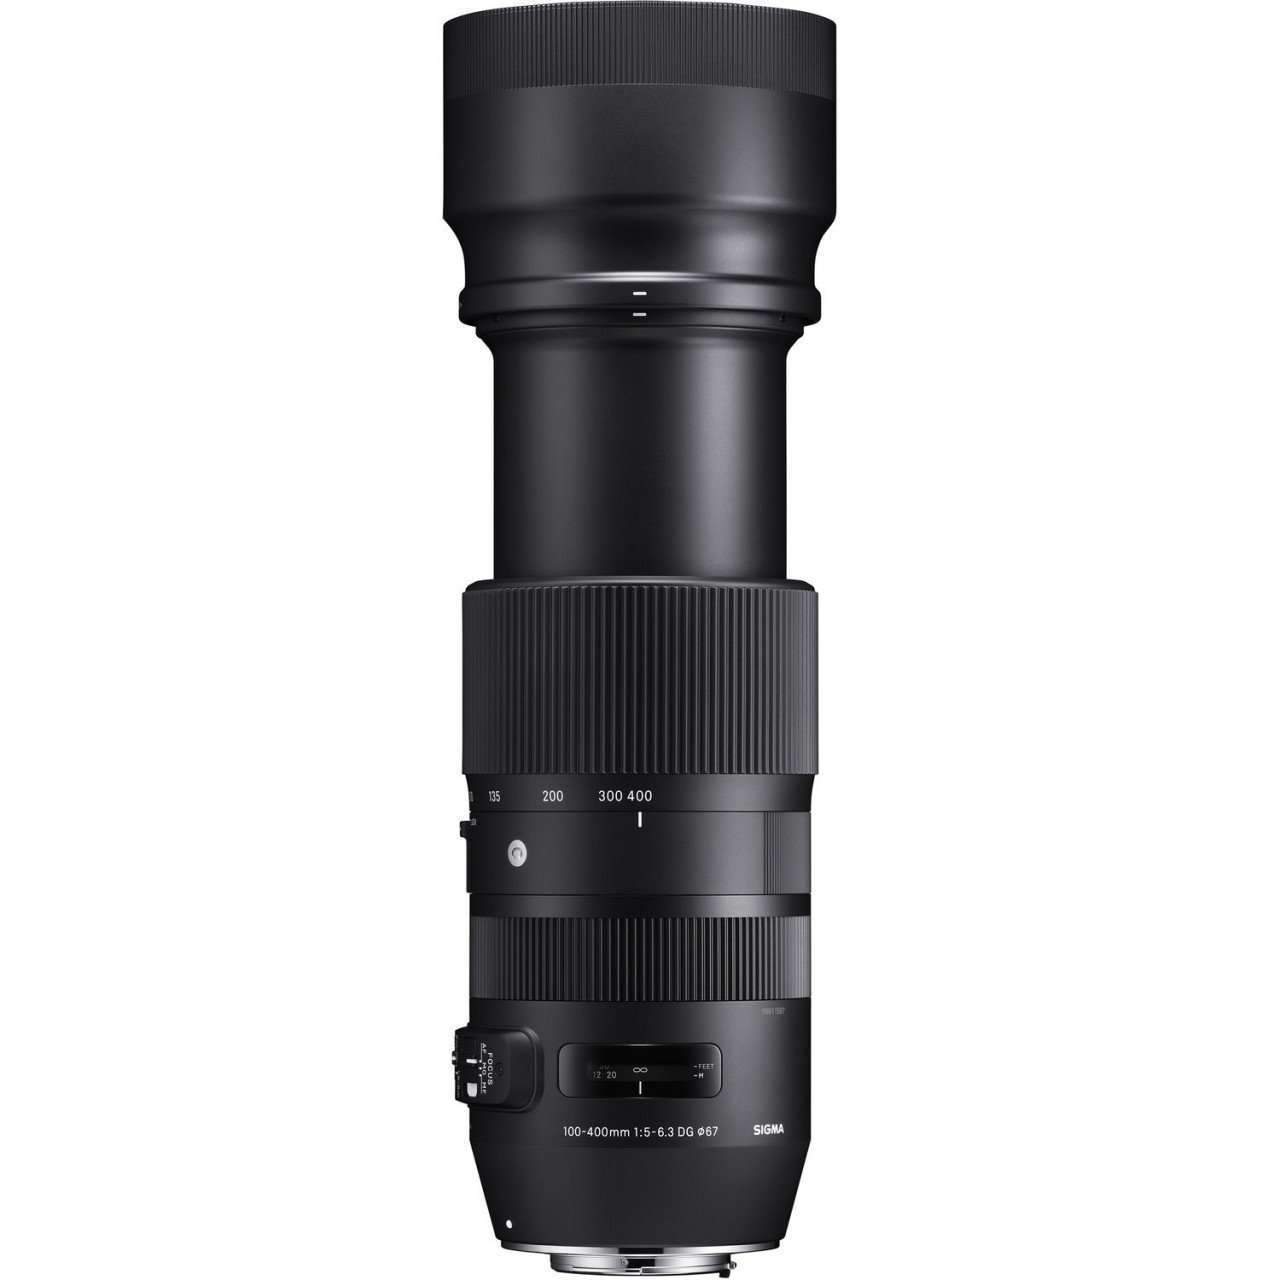 Sigma 100-400mm f/5-6.3 DG OS HSM Contemporary Lens for Canon EF Sigma Lens - DSLR Zoom